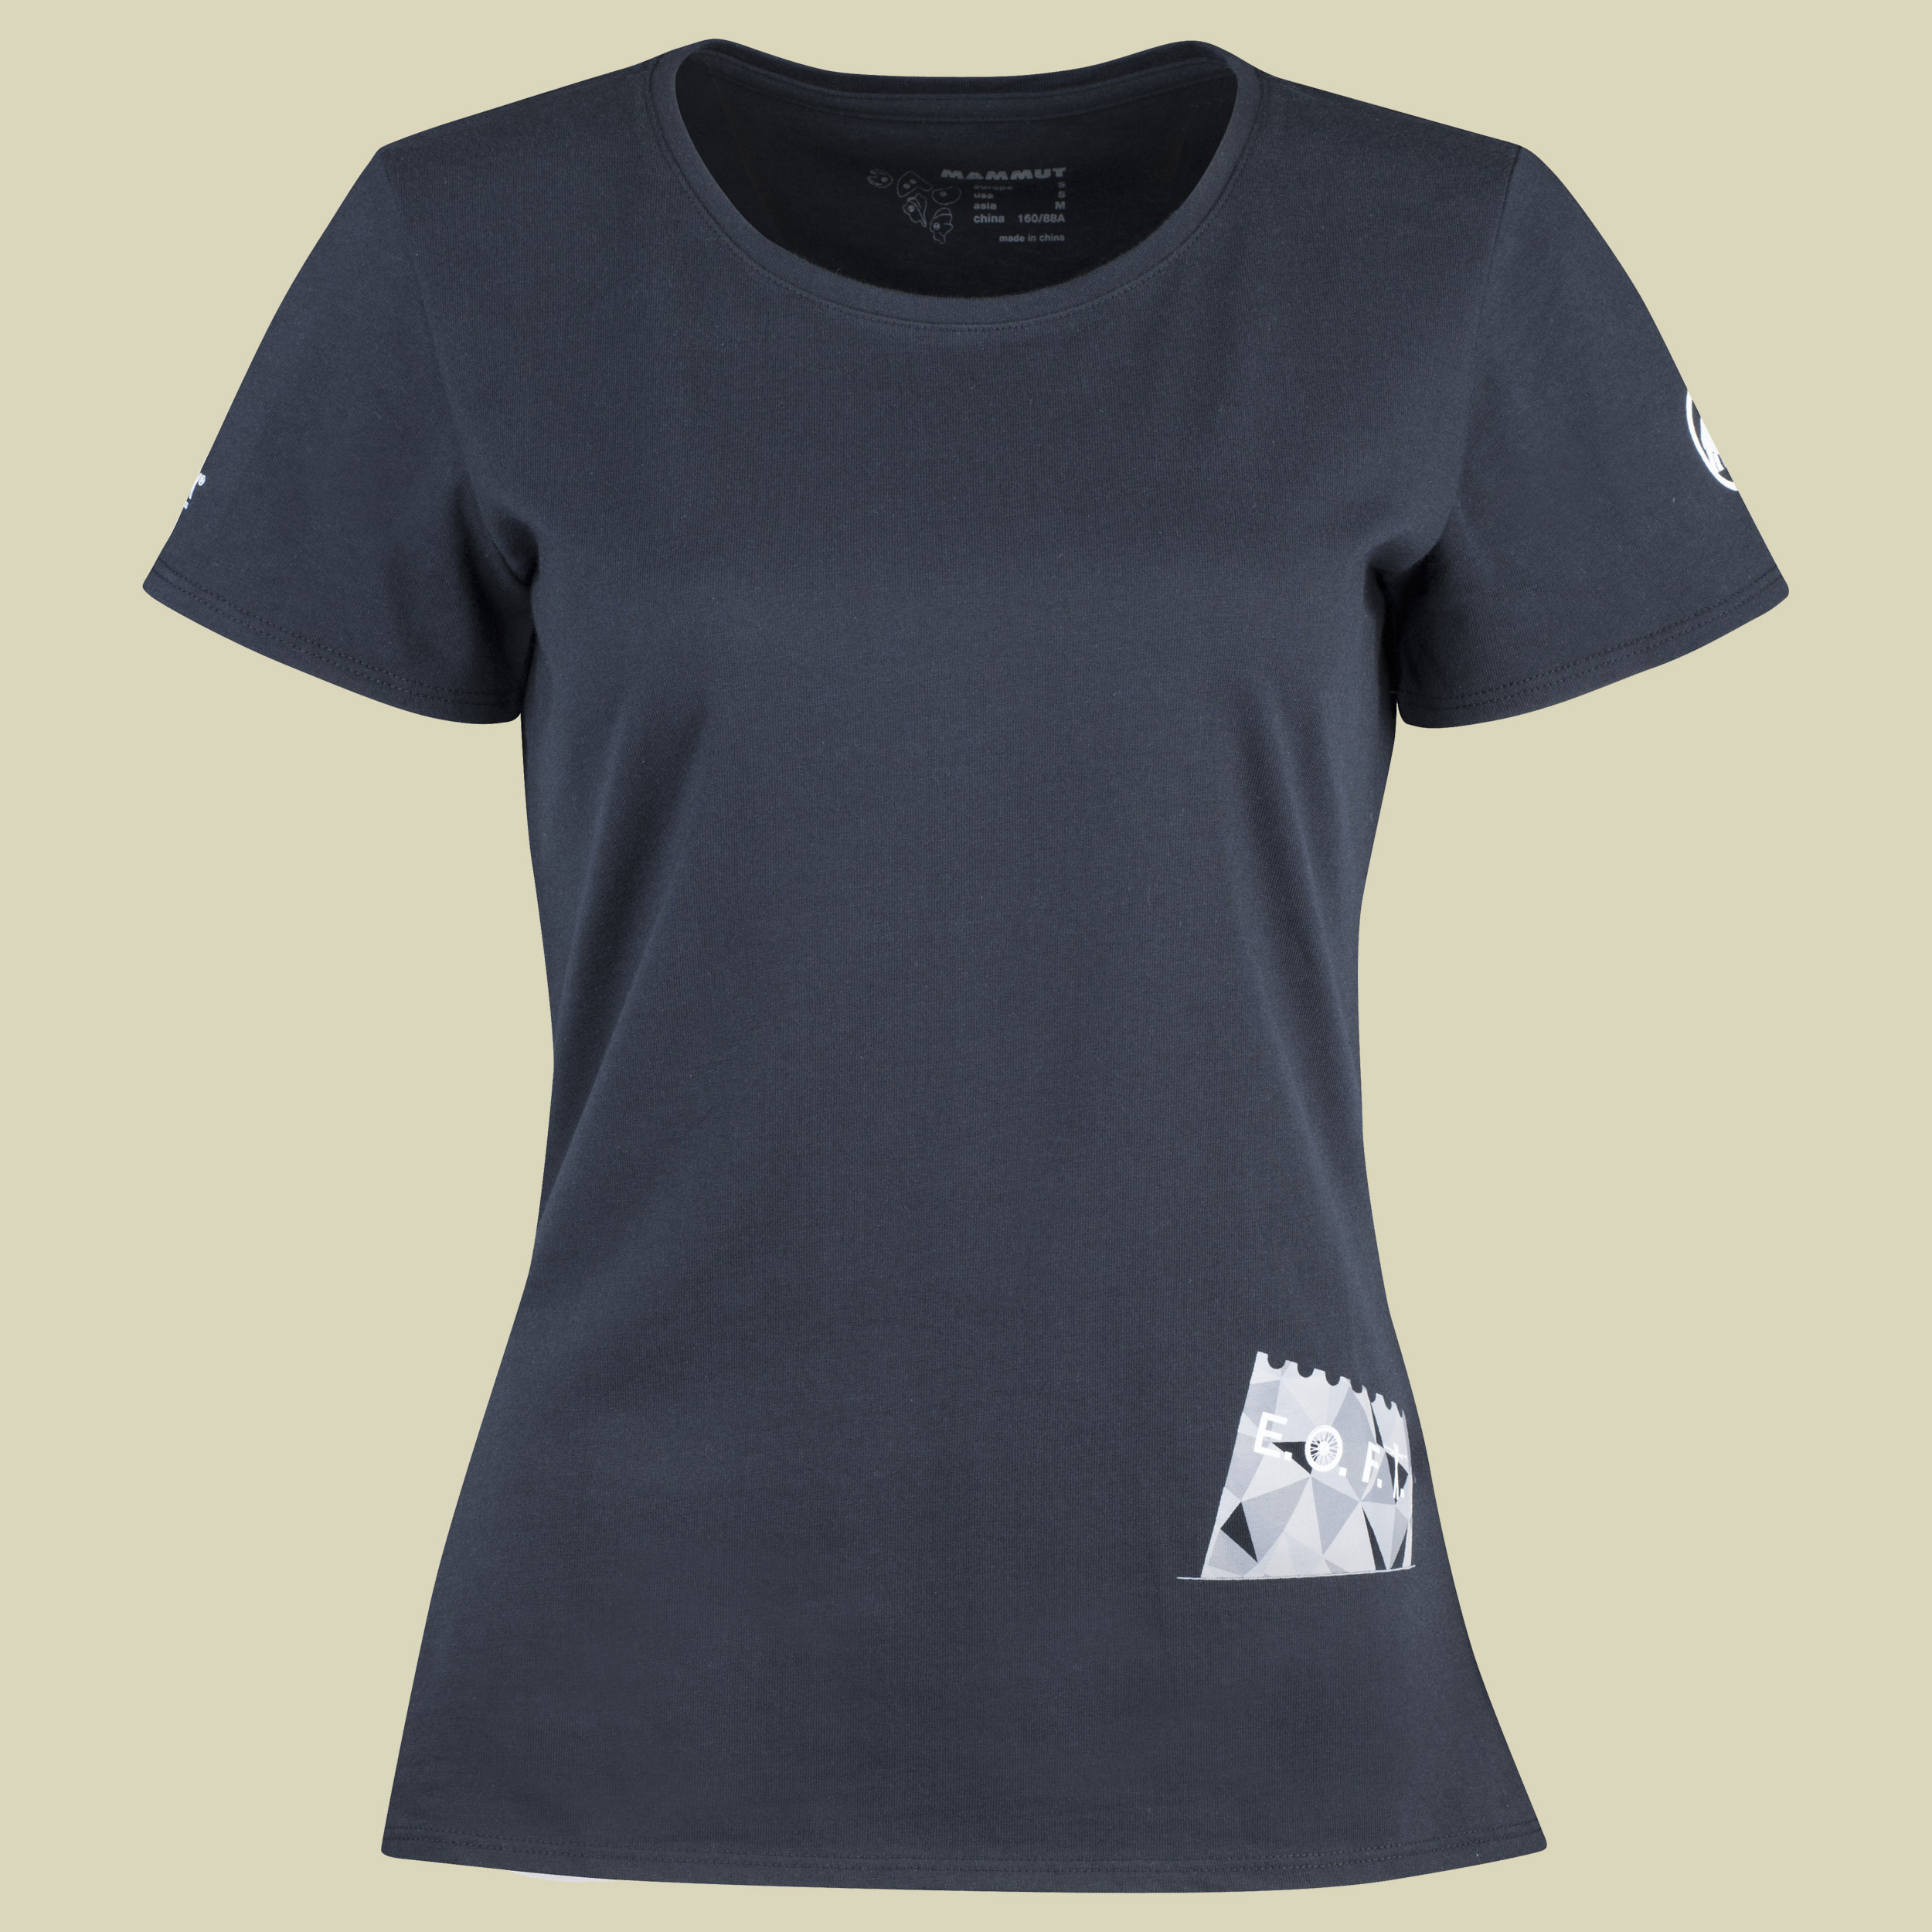 EOFT T-Shirt Women 2018/19 Größe L Farbe black